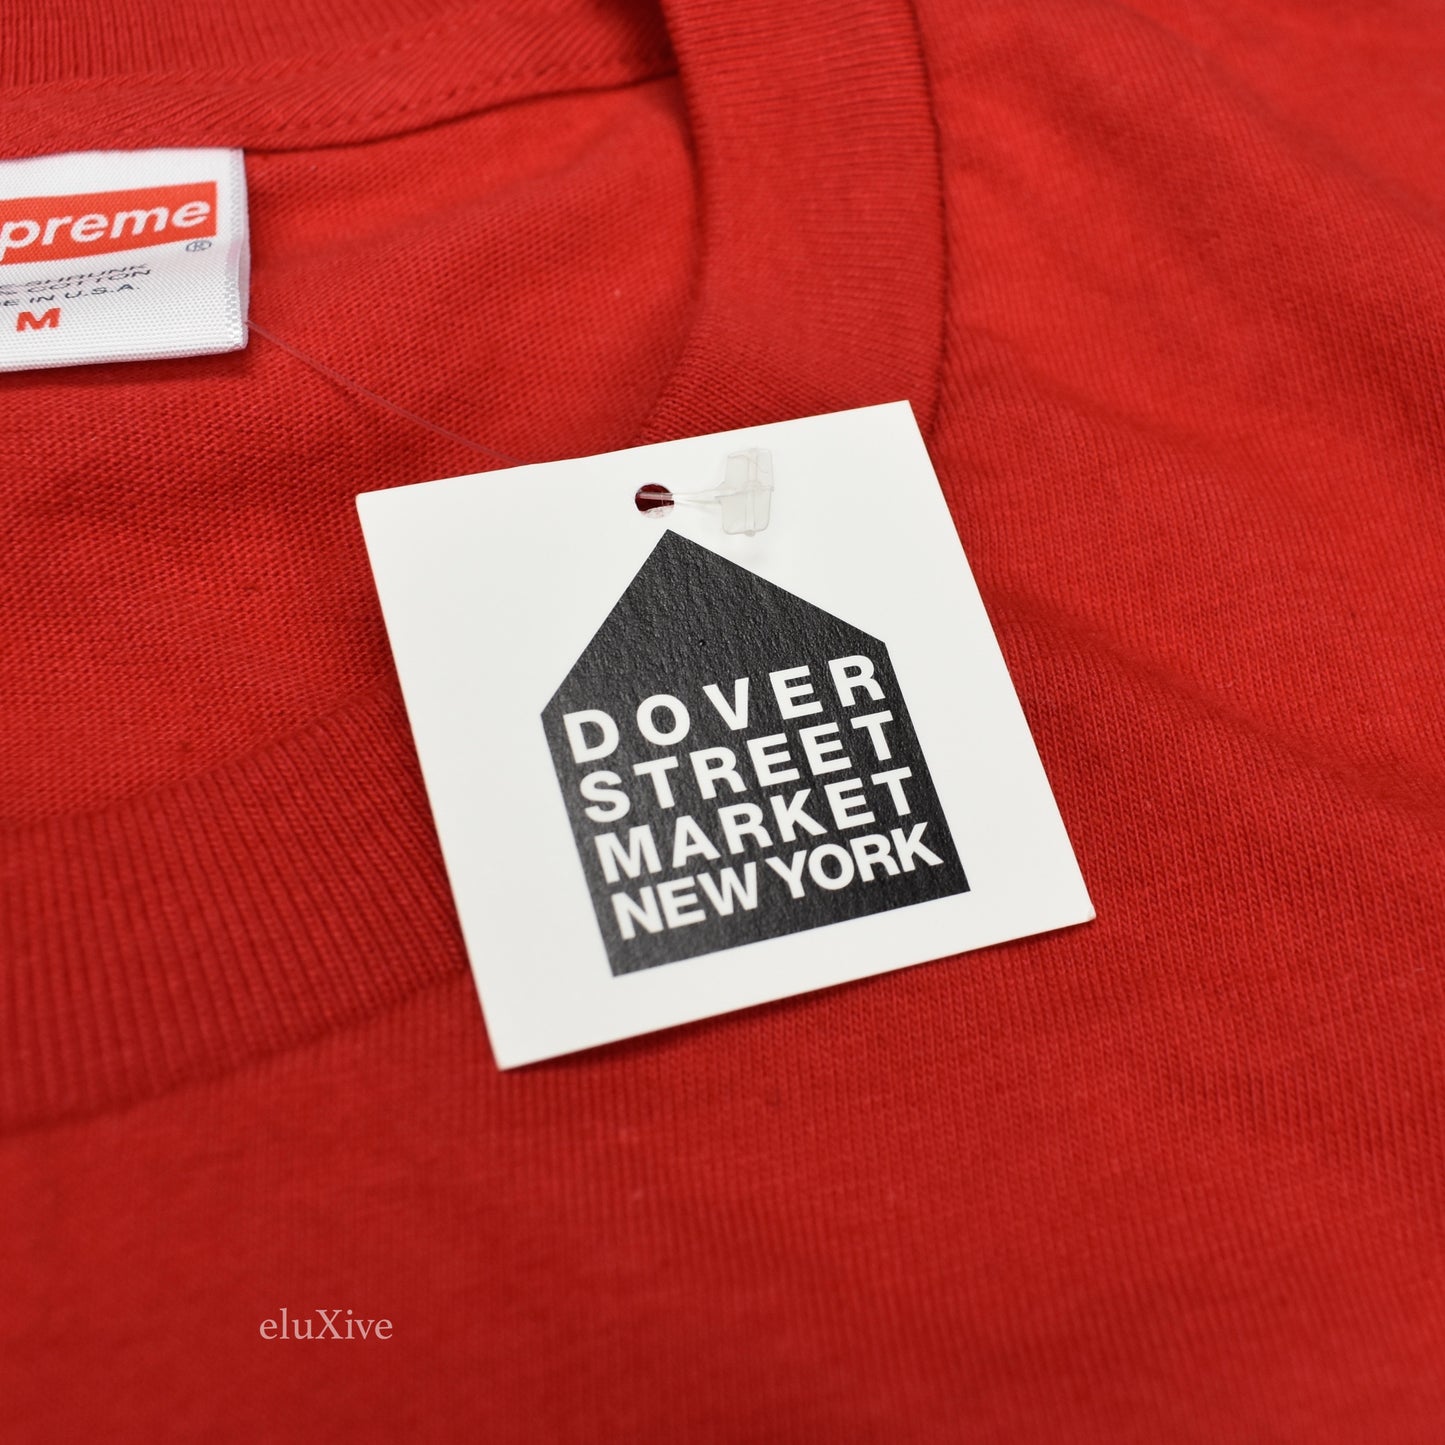 Supreme - Classic Logo Shop T-Shirt (Red)